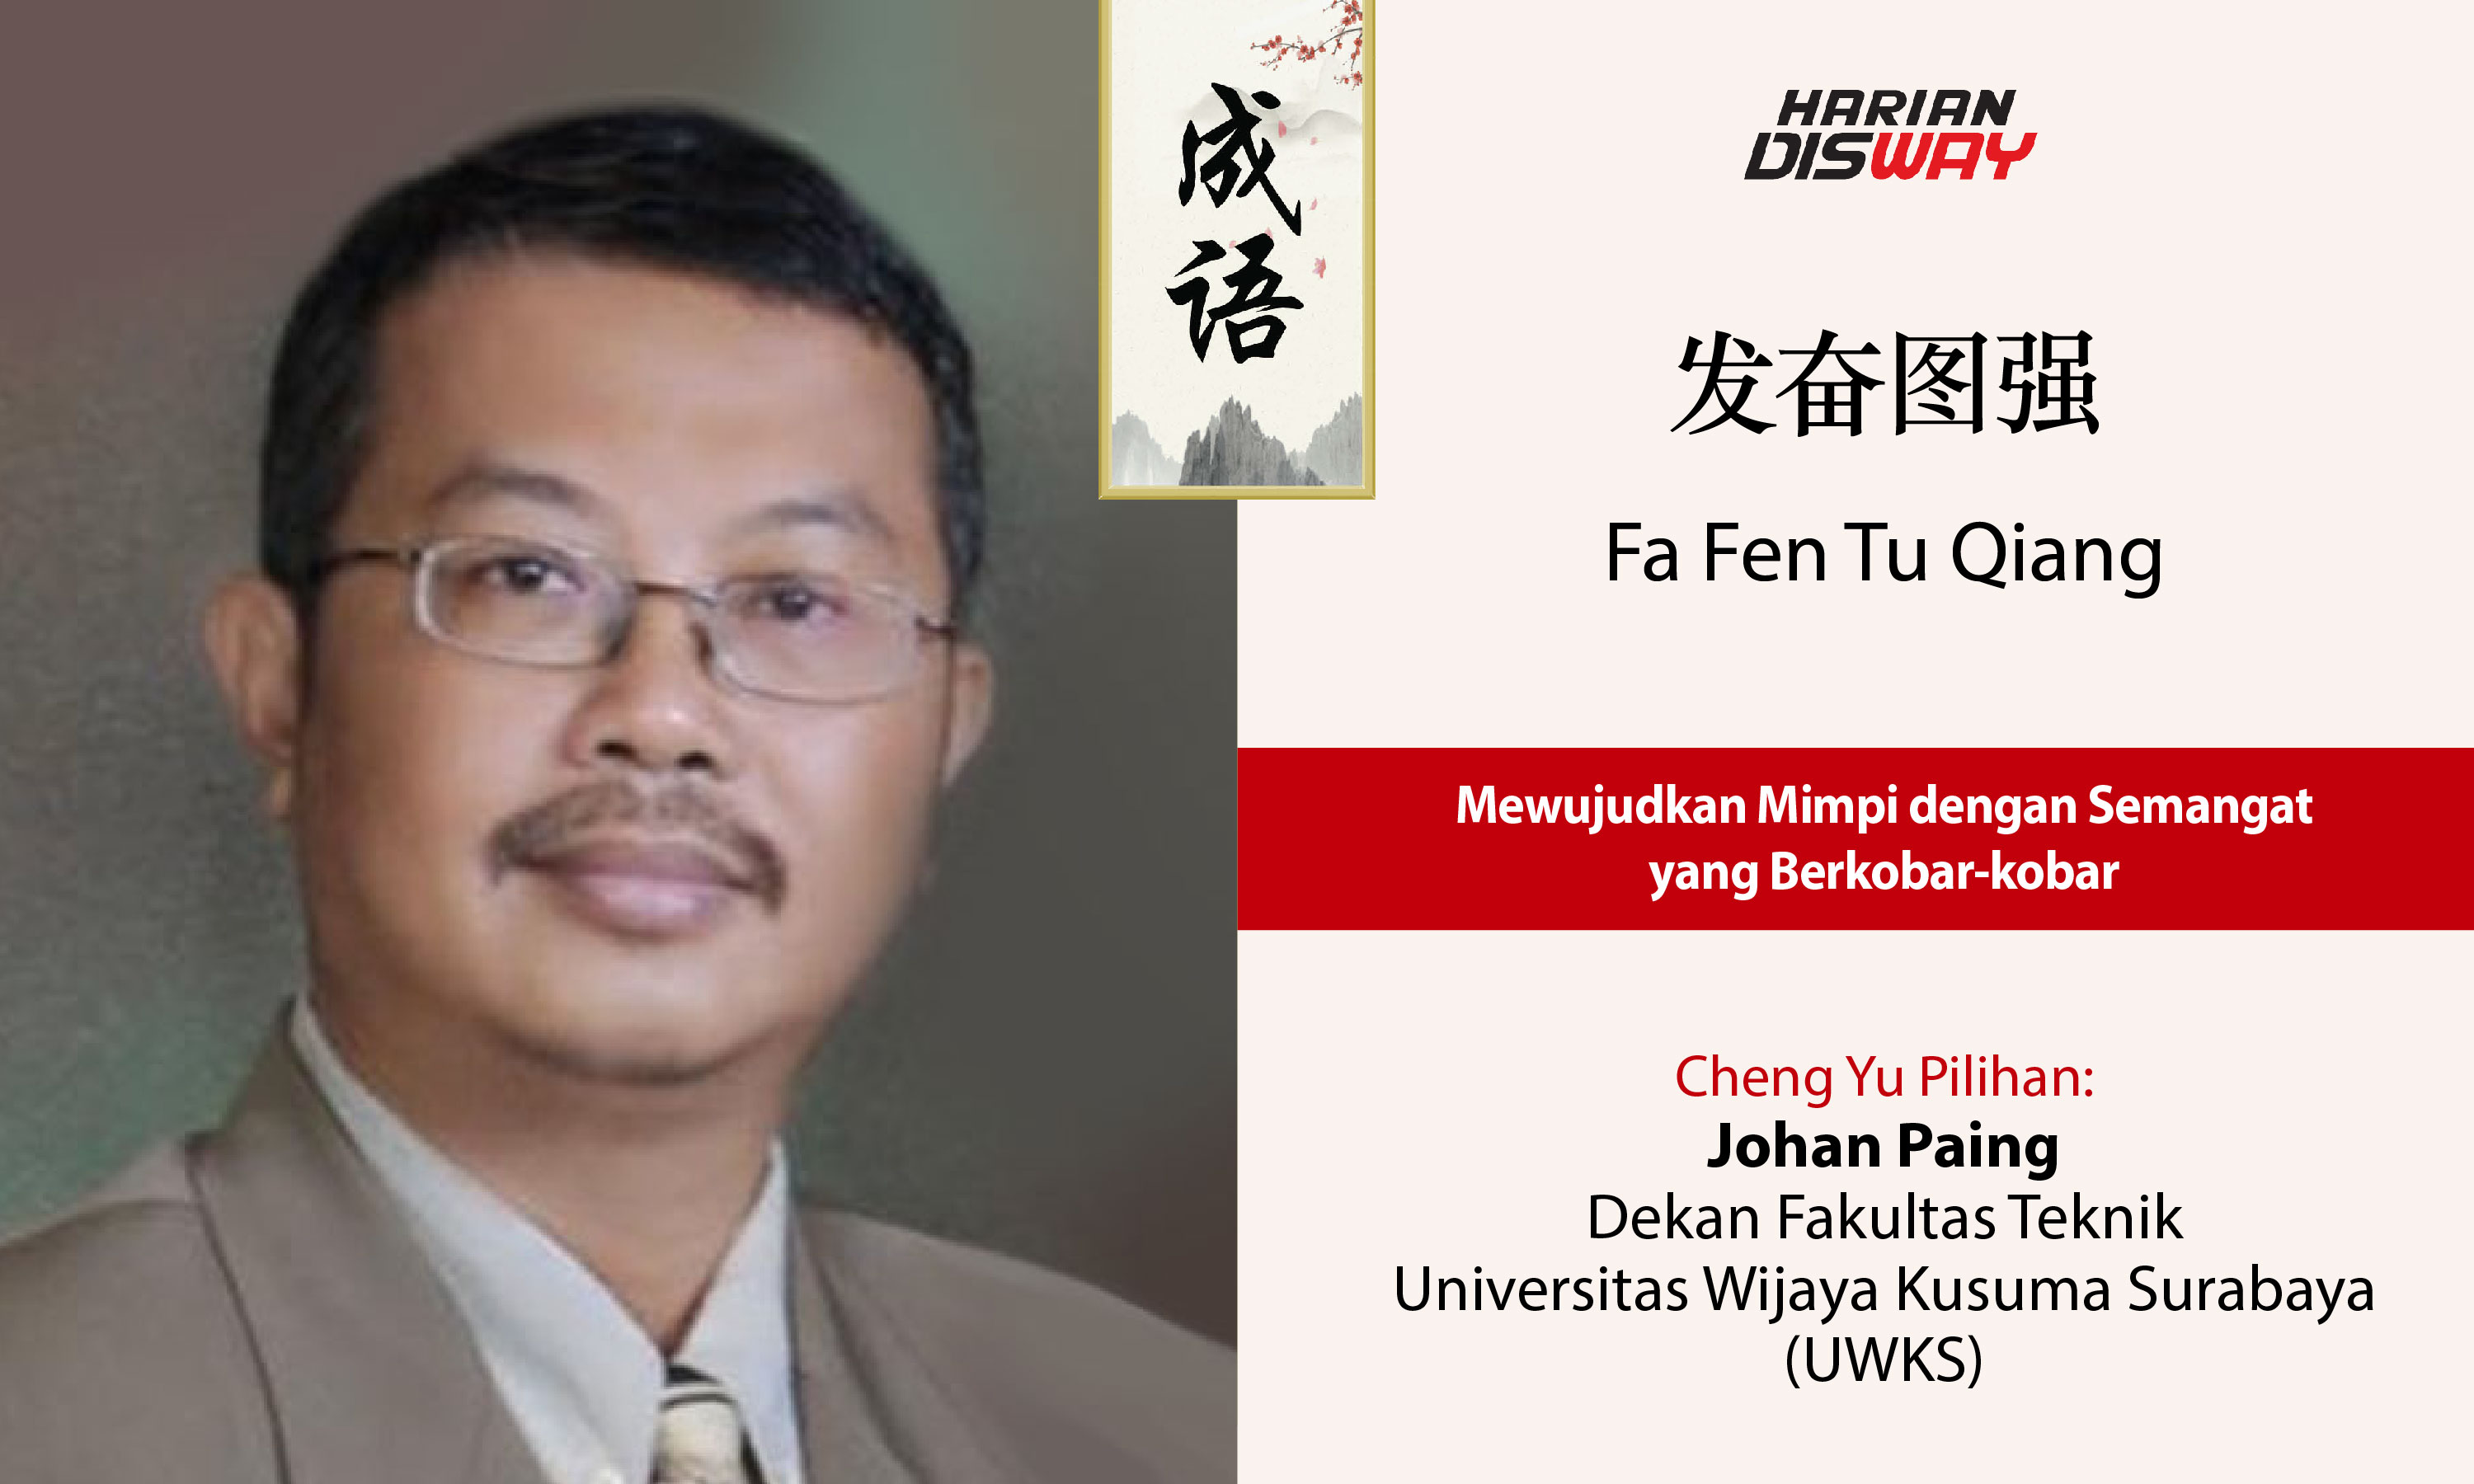 Cheng Yu Pilihan Dekan Fakultas Teknik Universitas Wijaya Kusuma Surabaya (UWKS) Johan Paing: Fa Fen Tu Qiang